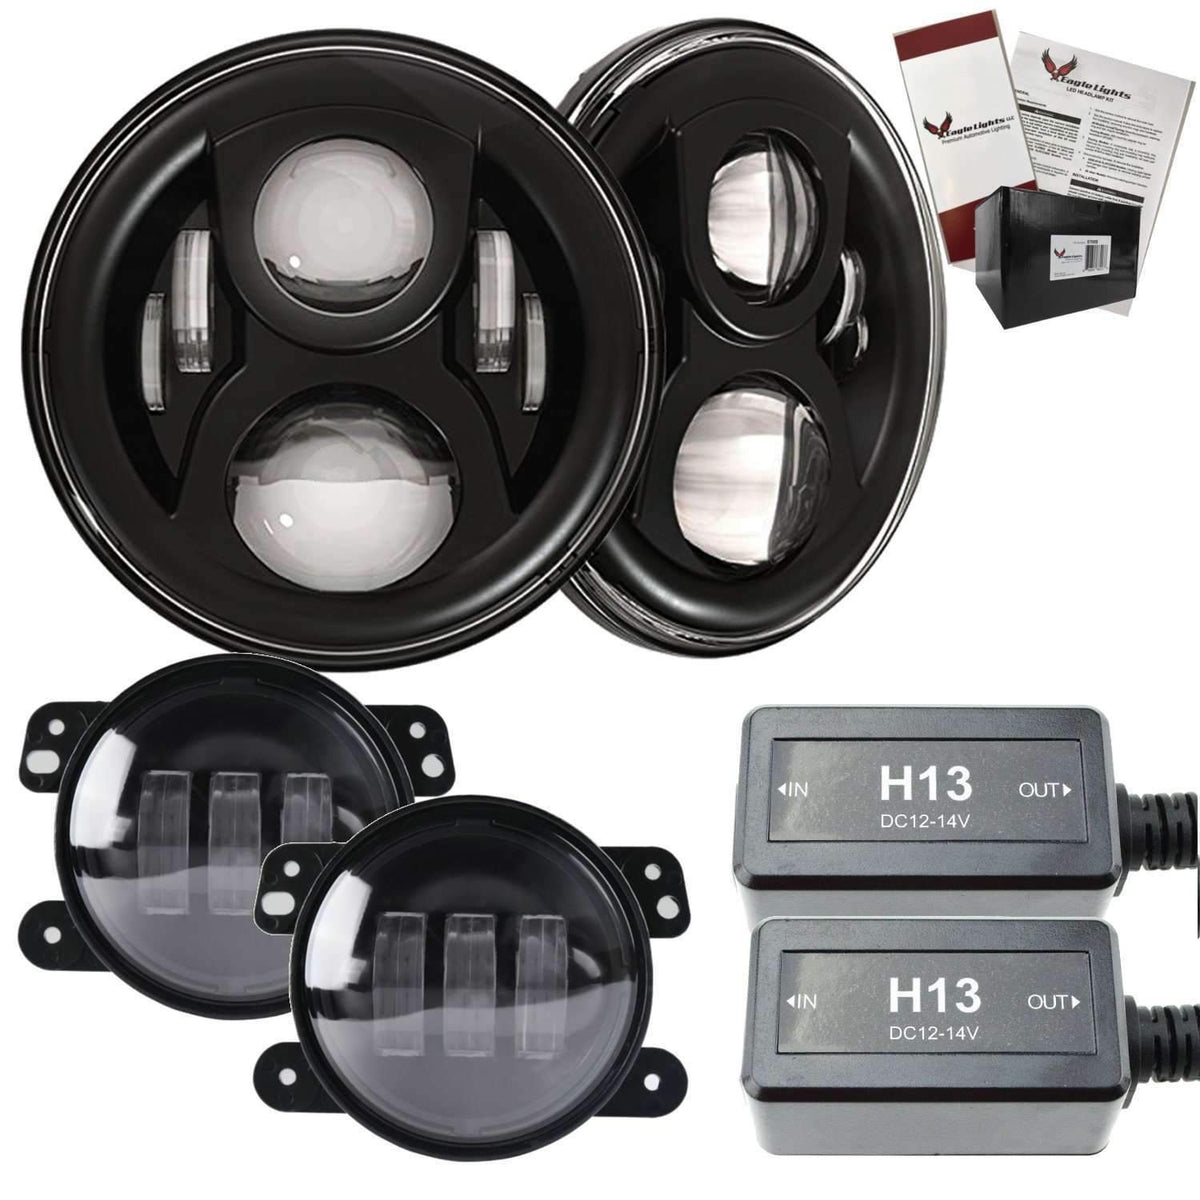 7” LED Headlight Kits - Eagle Lights 8700BG2 Generation 2 Headlight For Jeep Wrangler / Hummer - Double Pack*